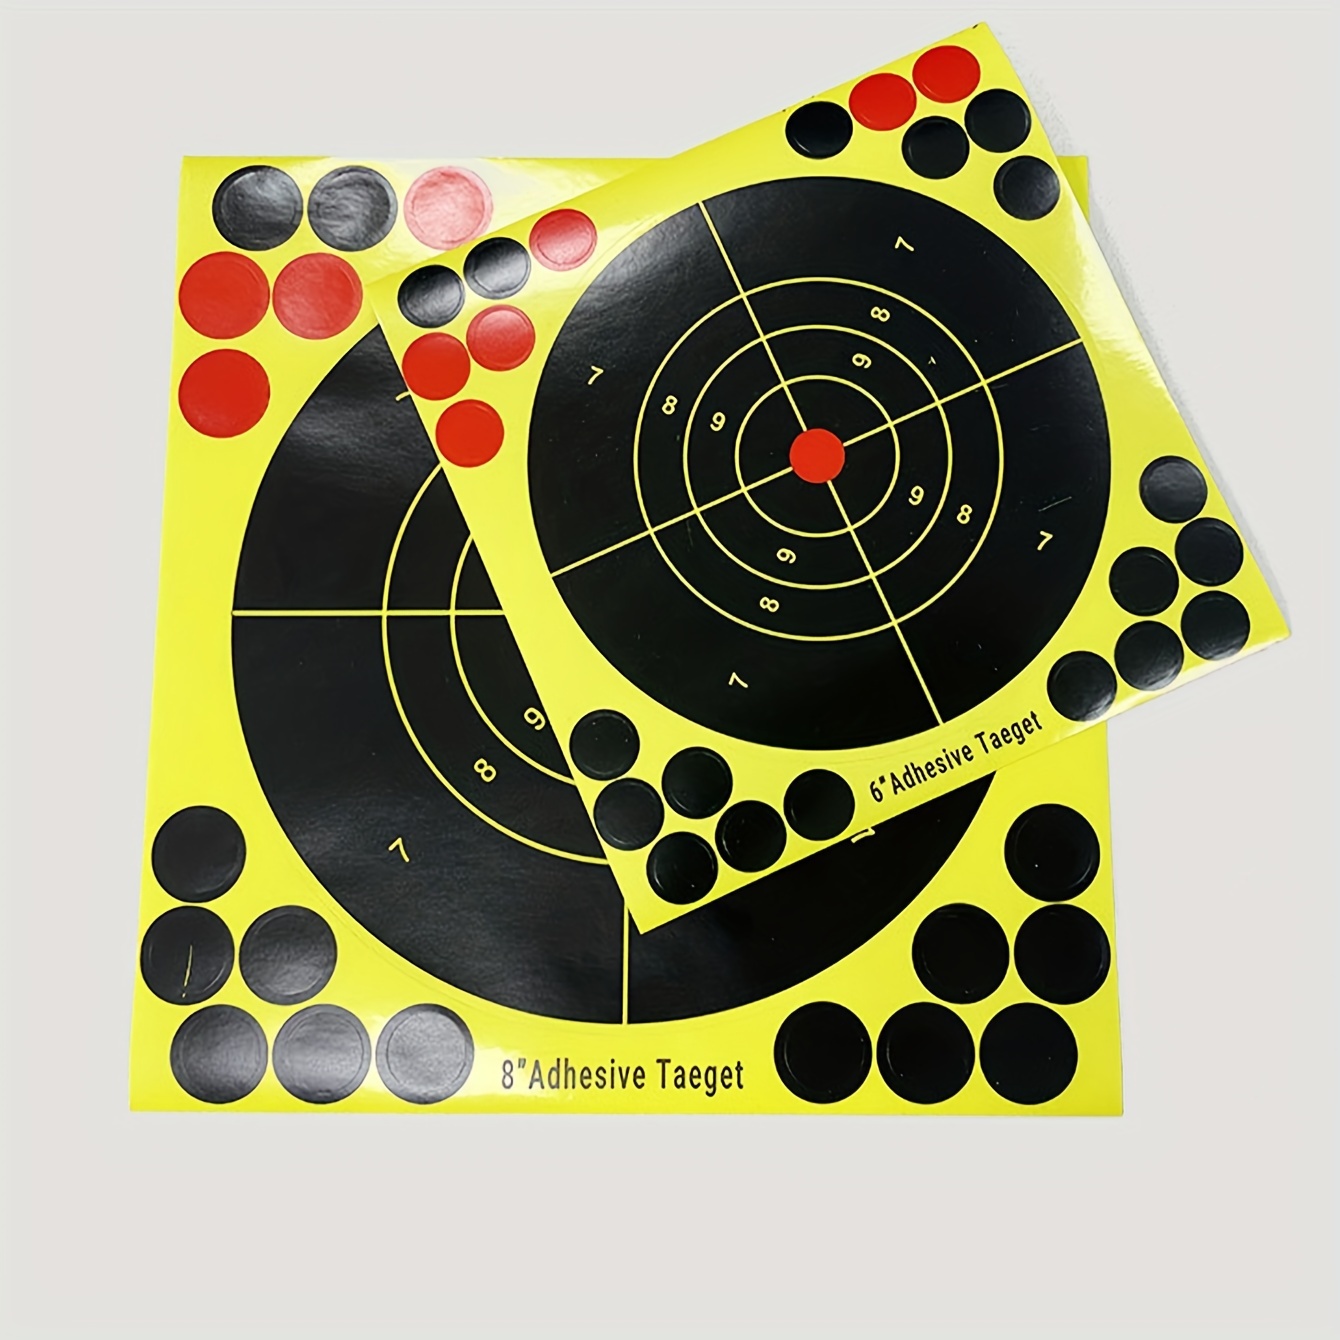 Splatter Targets, Stick & Splatter, Self Adhesive Reactive Target Paper For  Airsoft Training - Temu